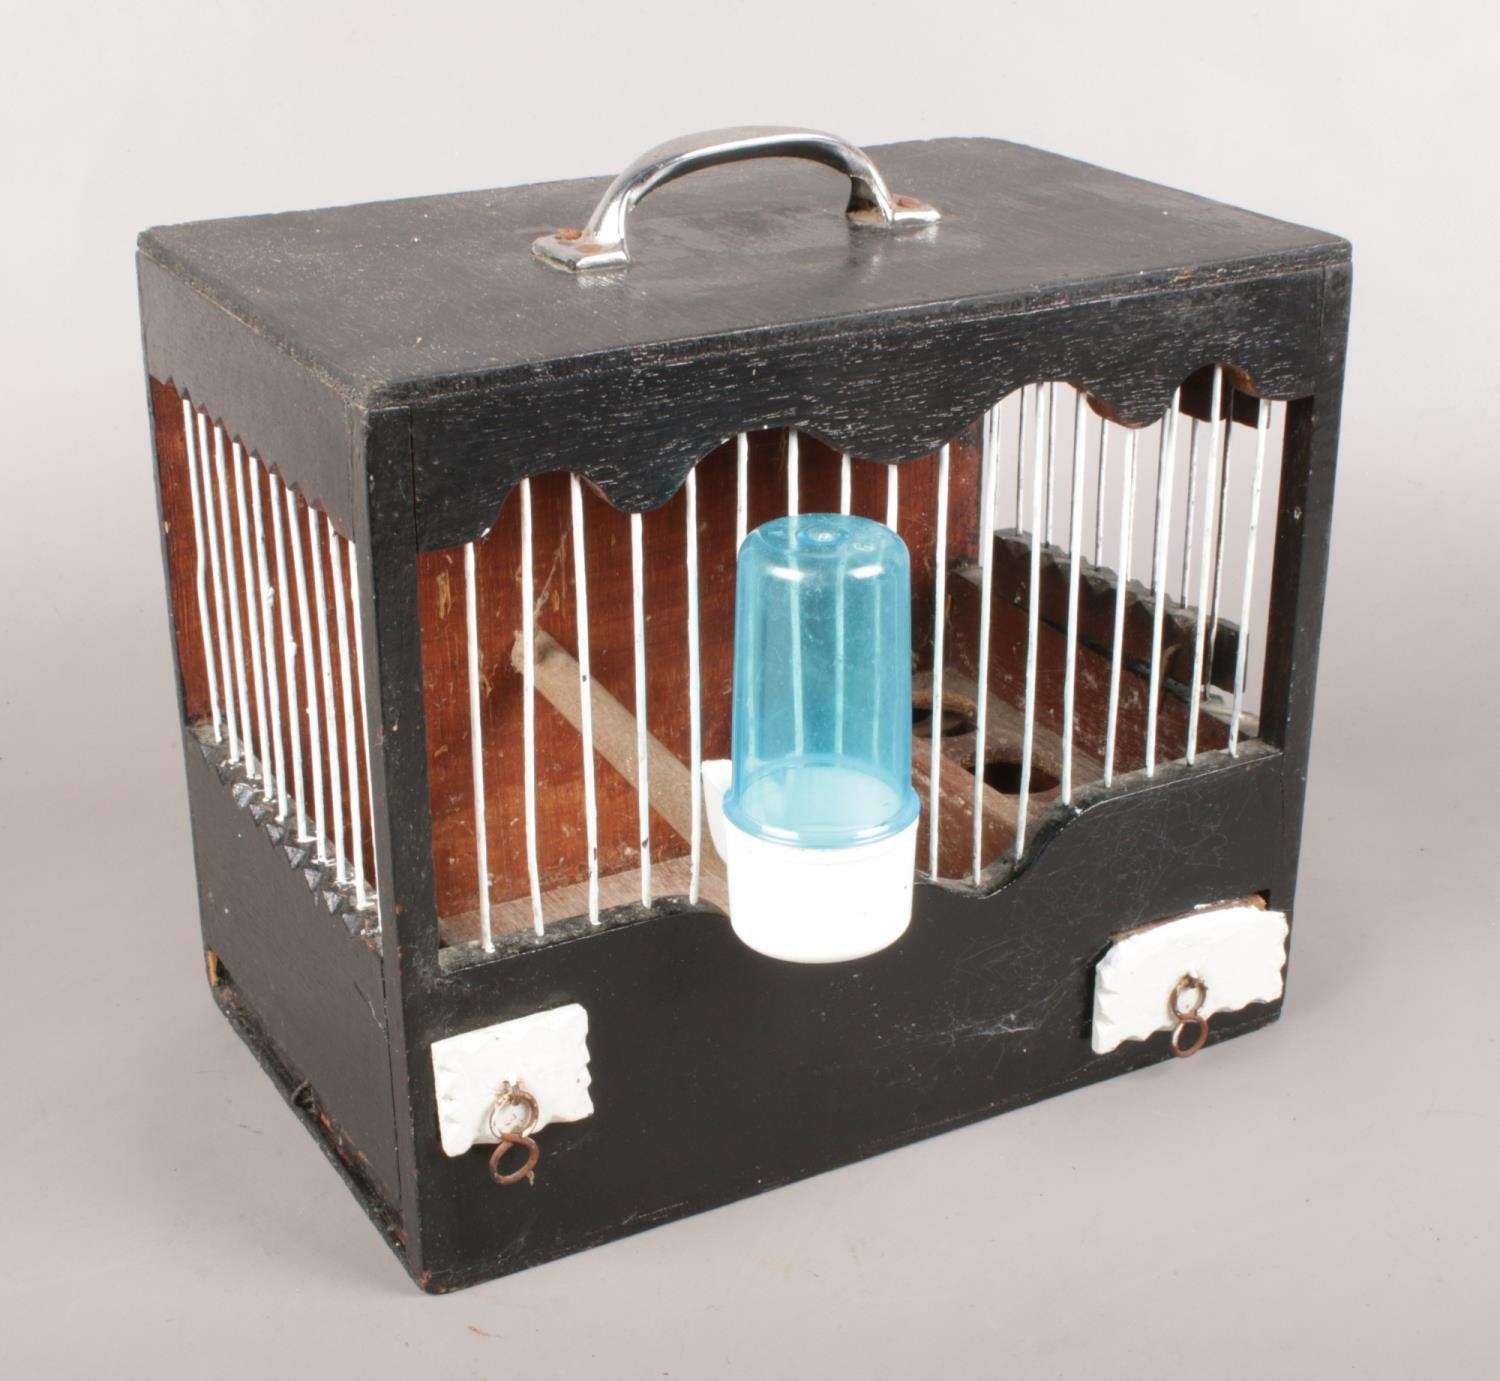 A small vintage wooden birds cage. (22.5cm x 25cm)